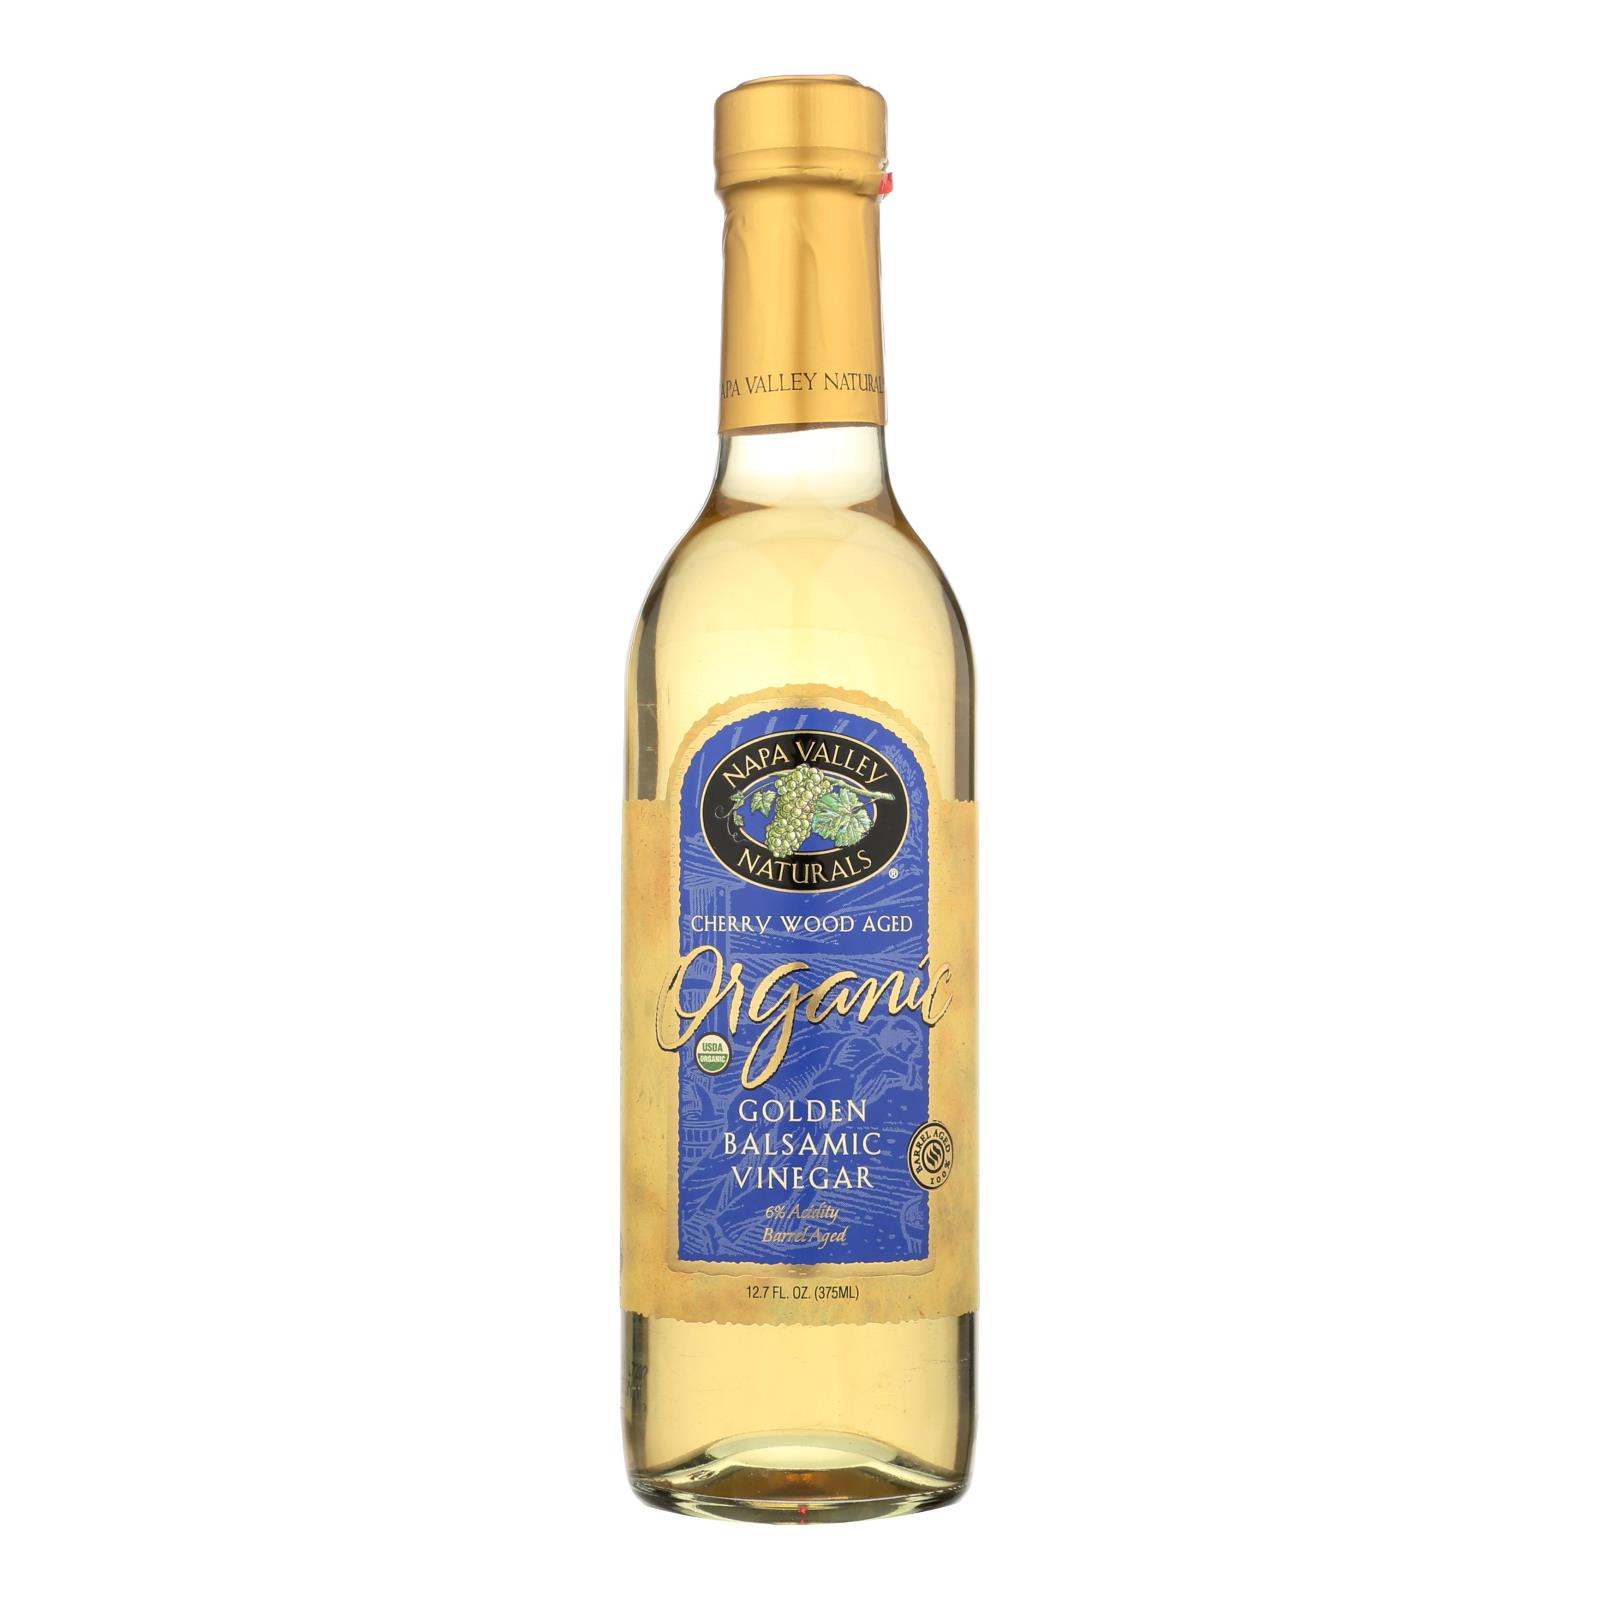 Napa Valley Naturals Organic Golden Balsamic Vinegar - 12개 묶음상품 - 12.7 OZ